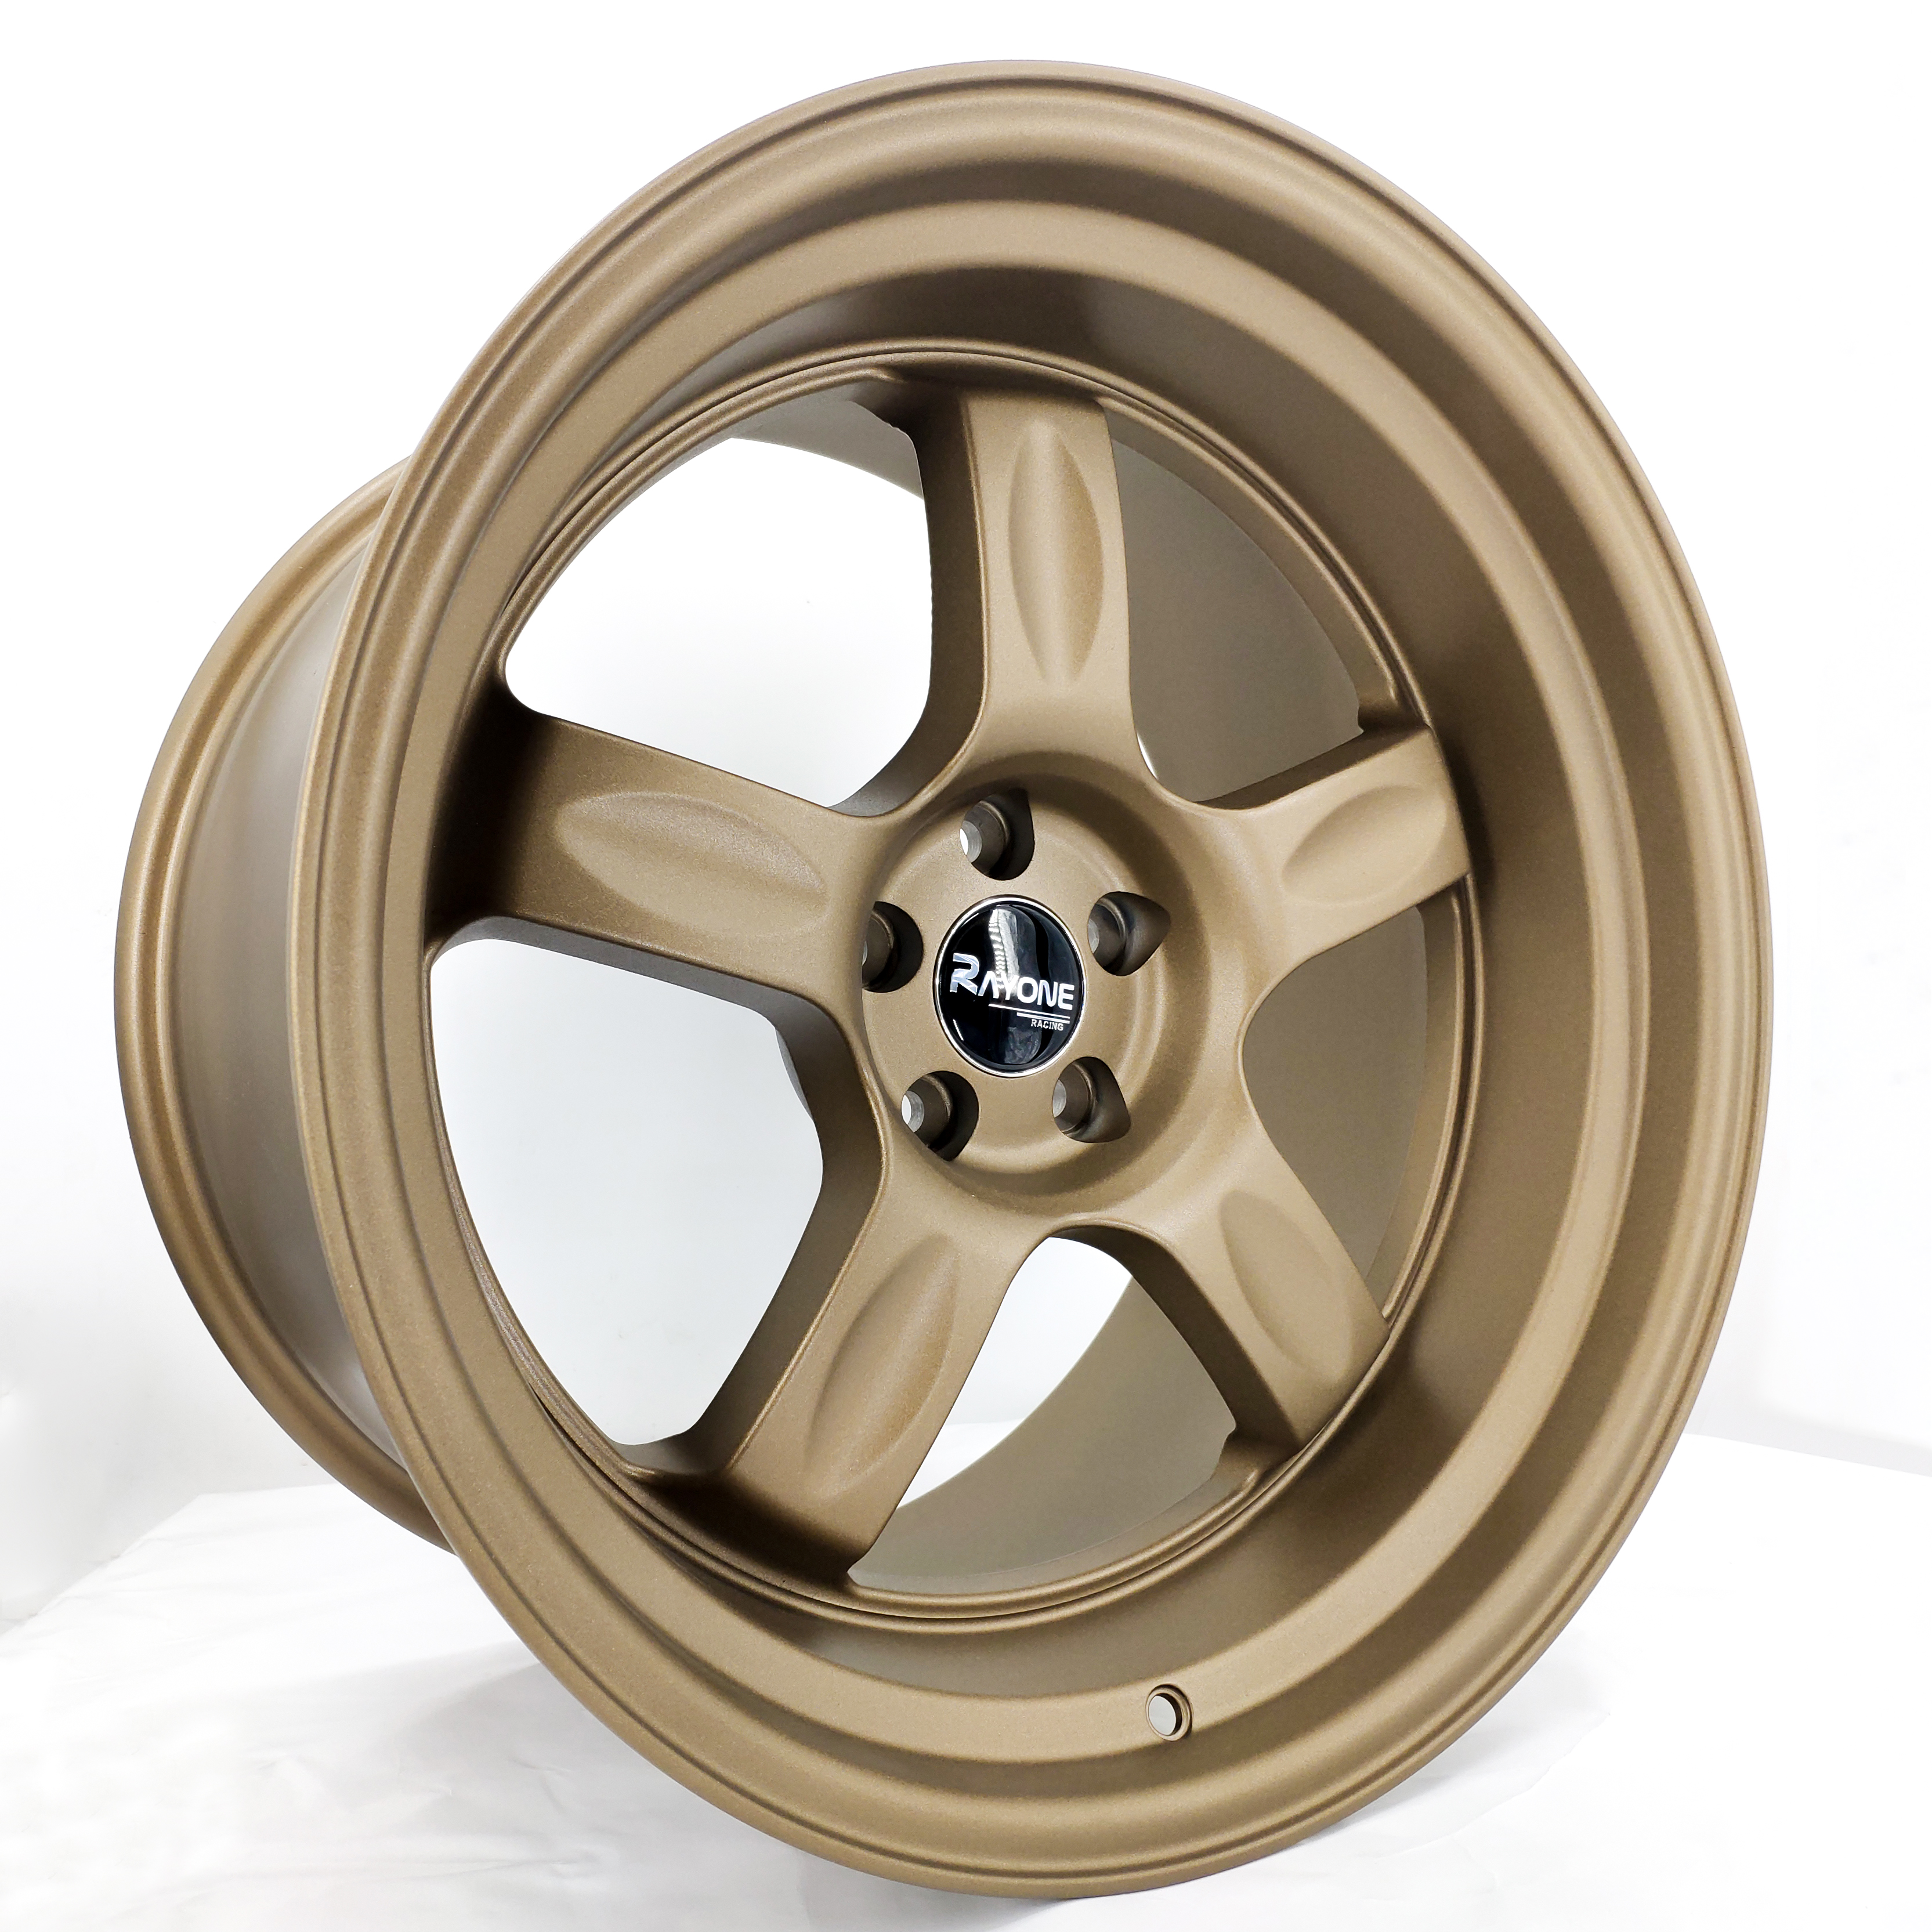 High reputation Corleone Forged Wheels - Rayone’s New Design 17/18inch 5 Spoke Aftermarket Rims – Rayone